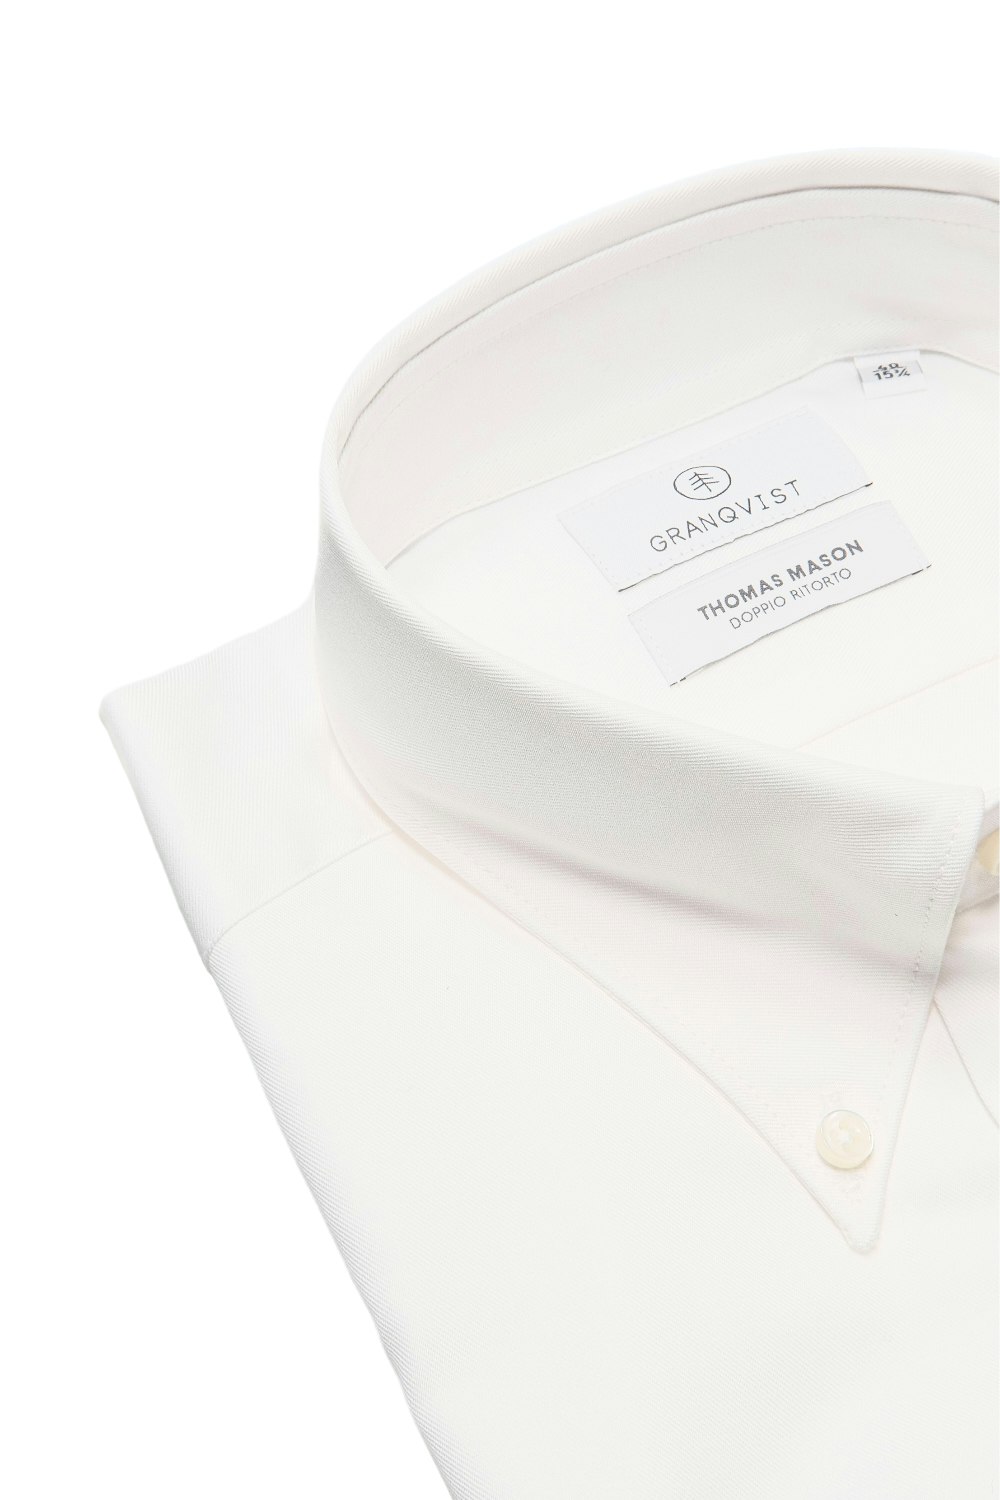 Premium Solid Twill Shirt - Button Down - White